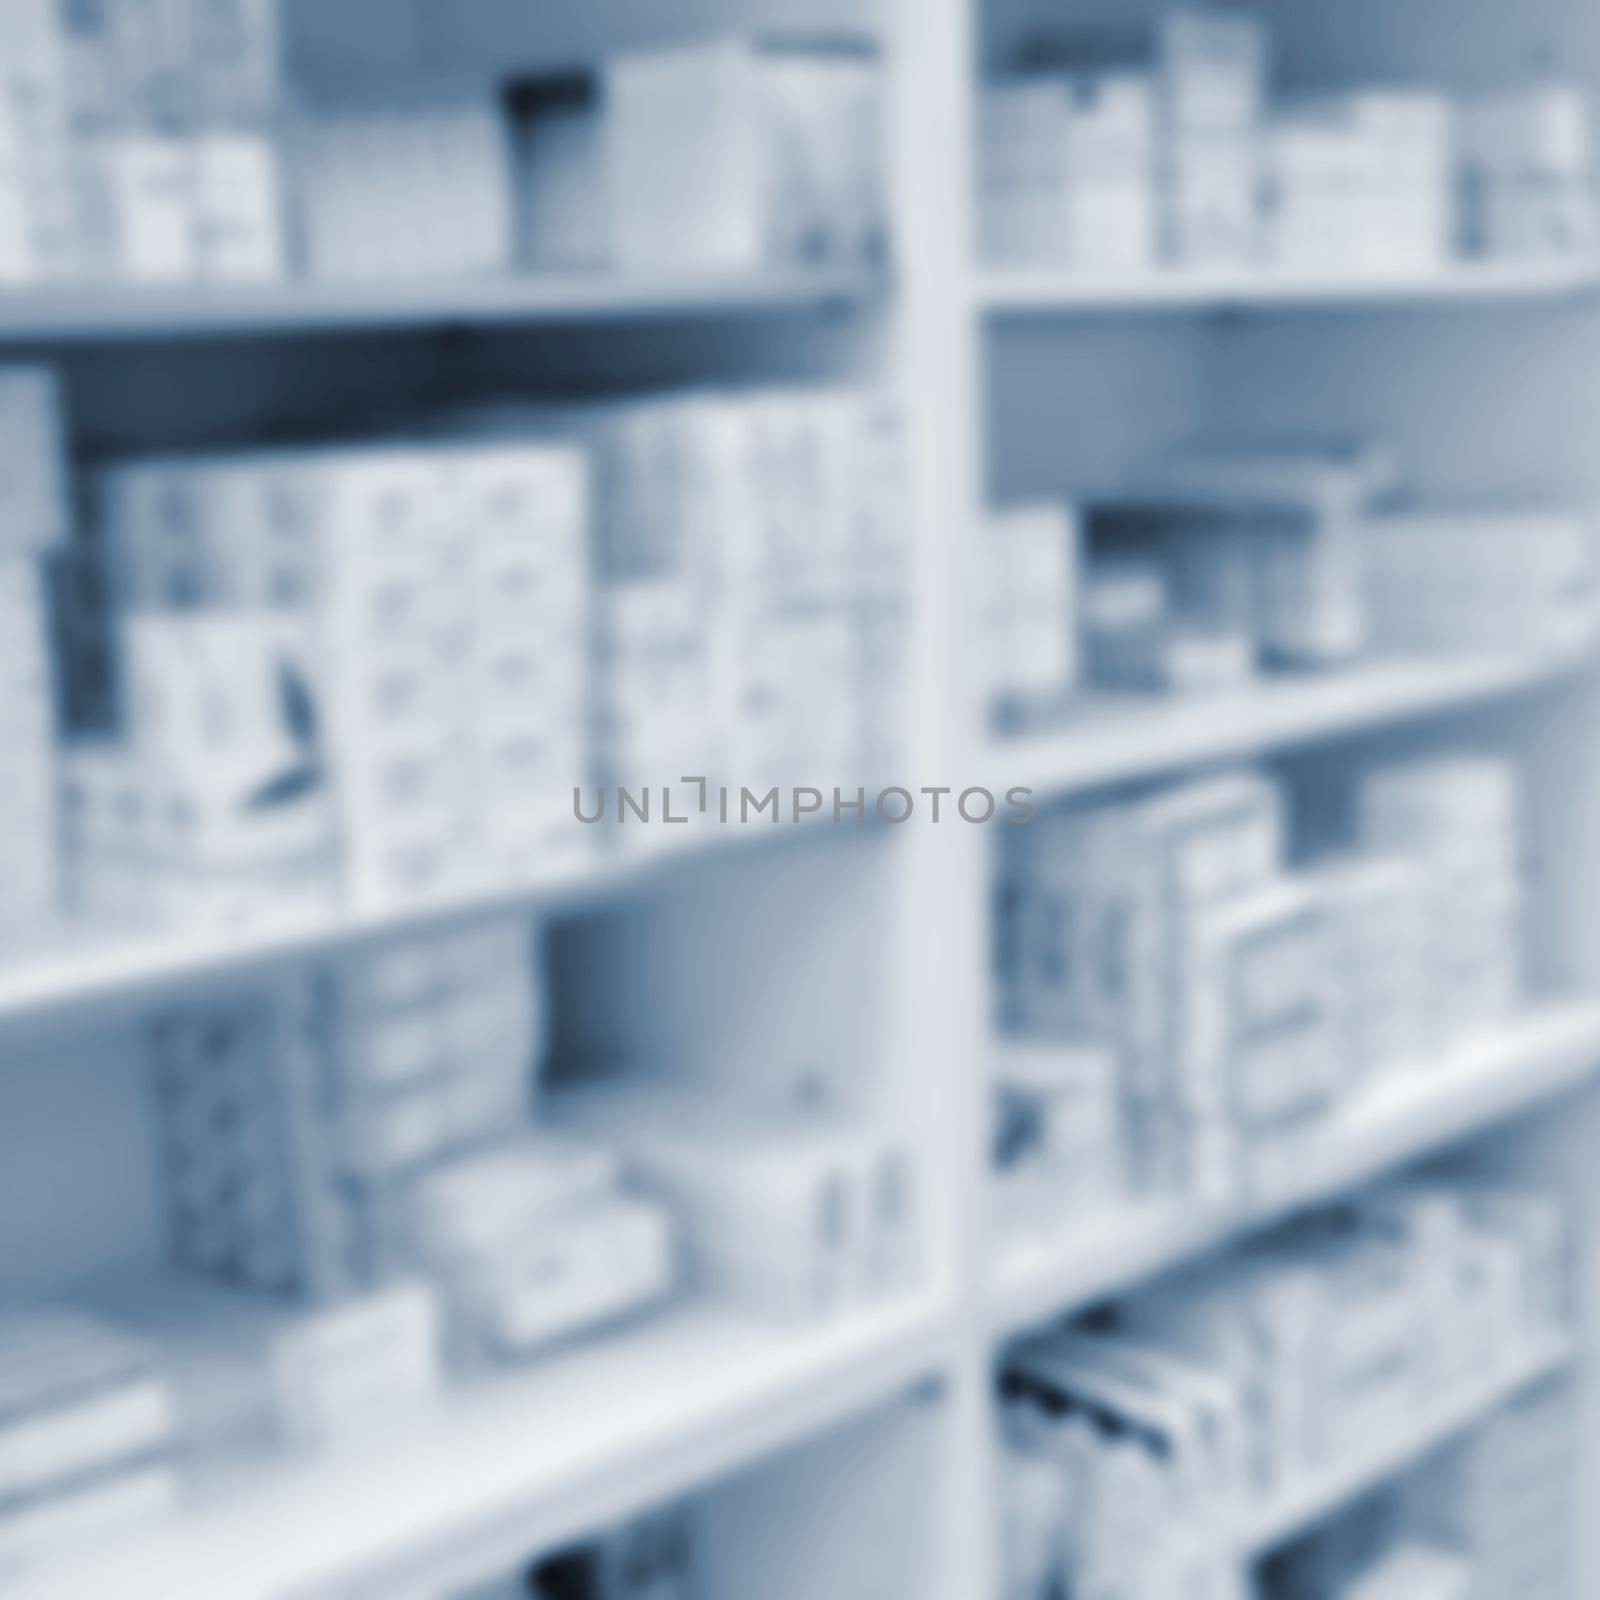 Pharmacy blurred background. Pharmacy store drugs shelves interior blurred background